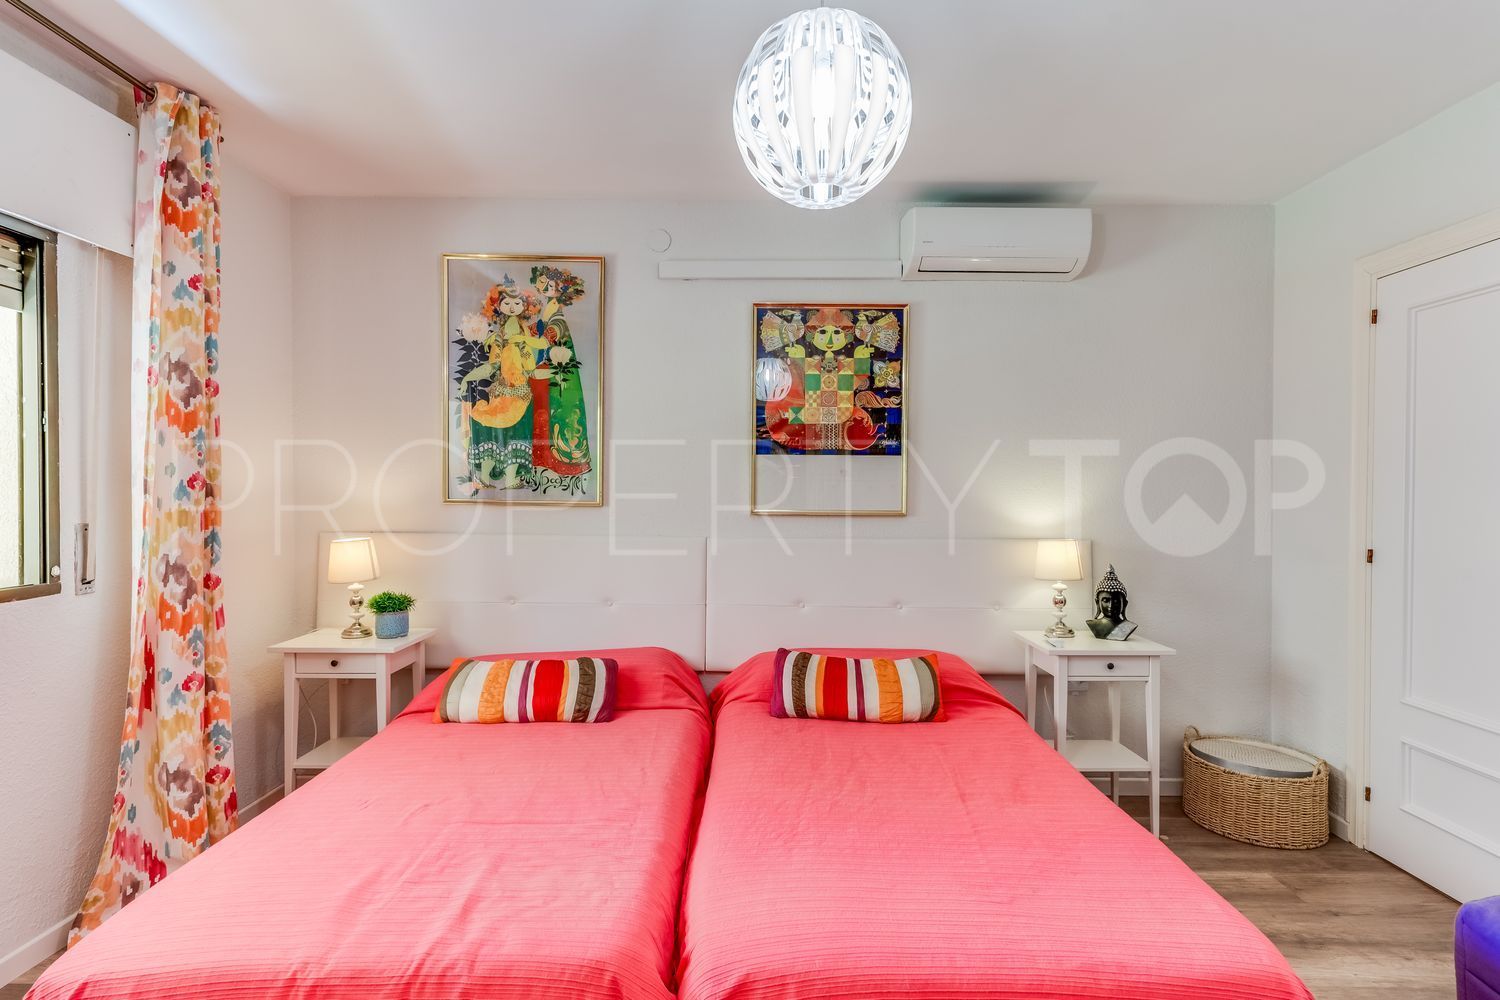 Flat for sale in Playa de la Fontanilla with 2 bedrooms